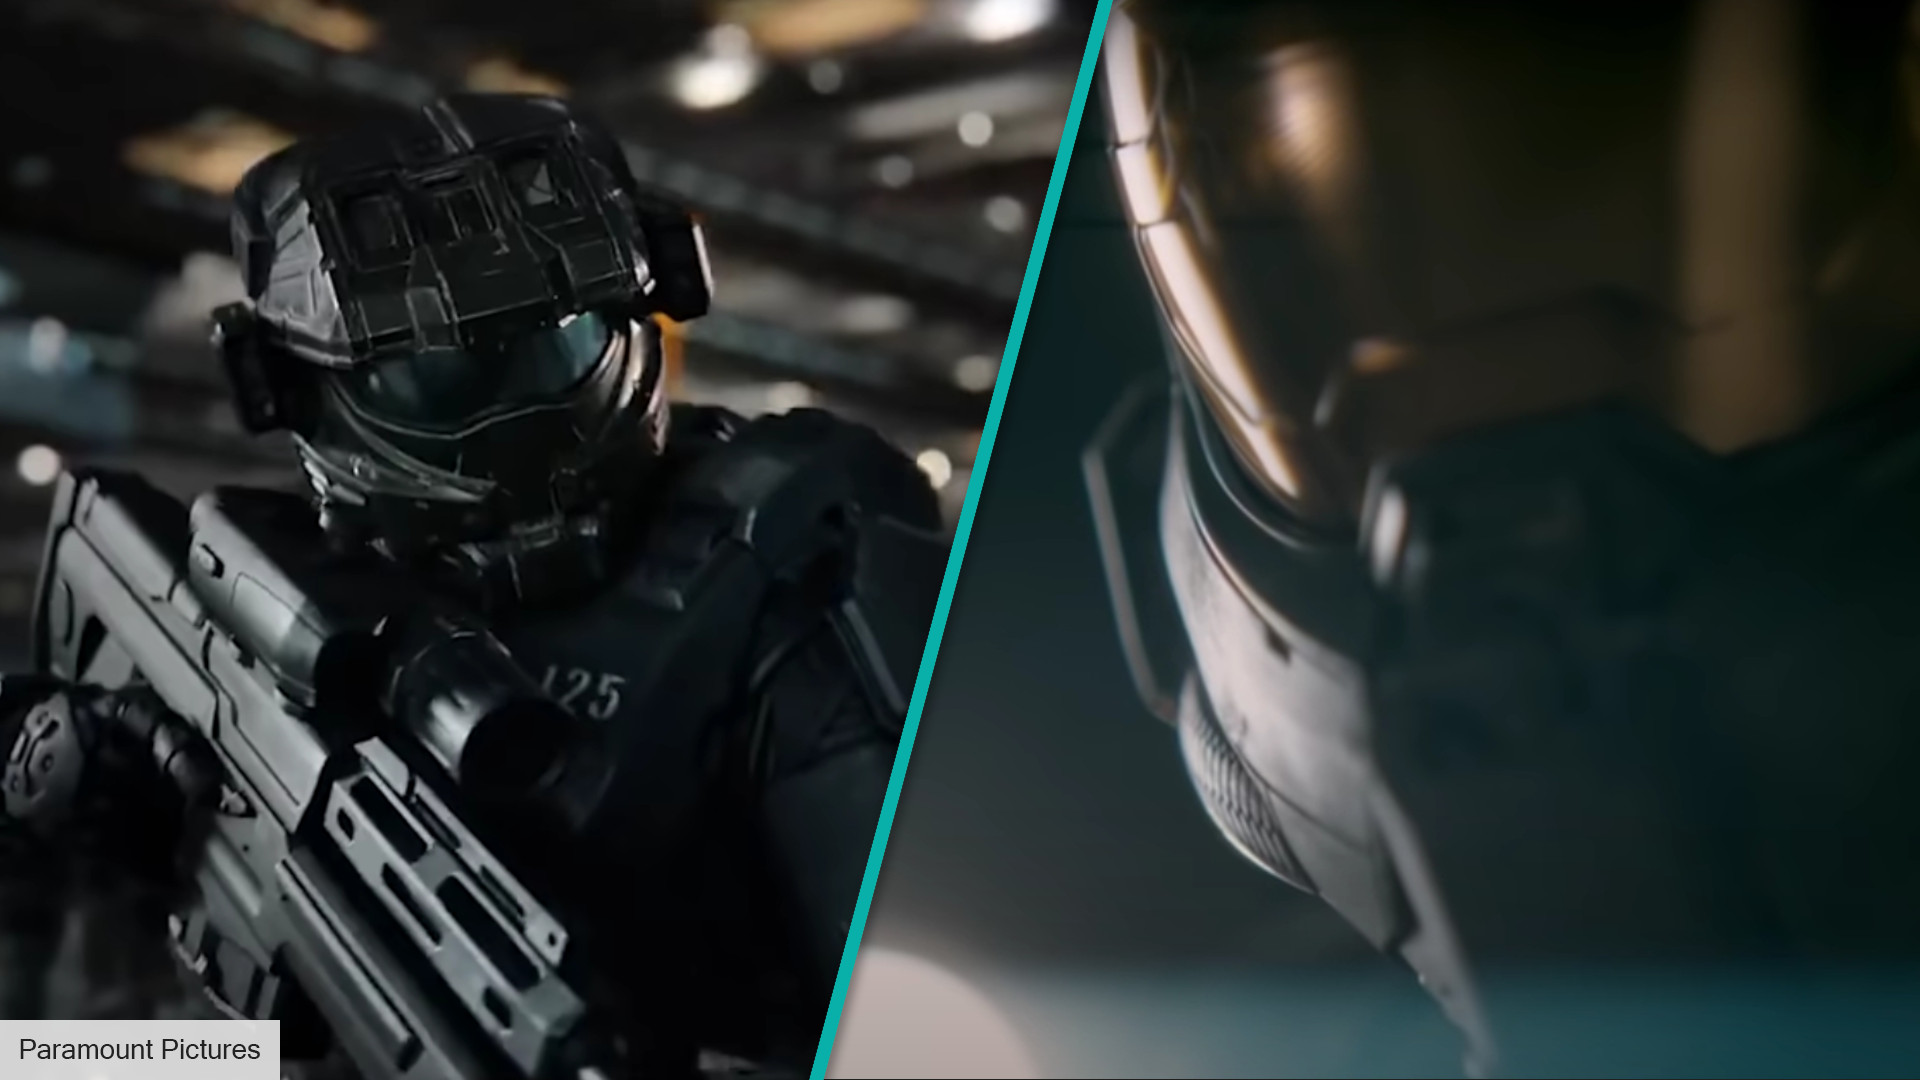 Halo Season 2 Trailer: Master Chief Battles Covenant in Paramount+